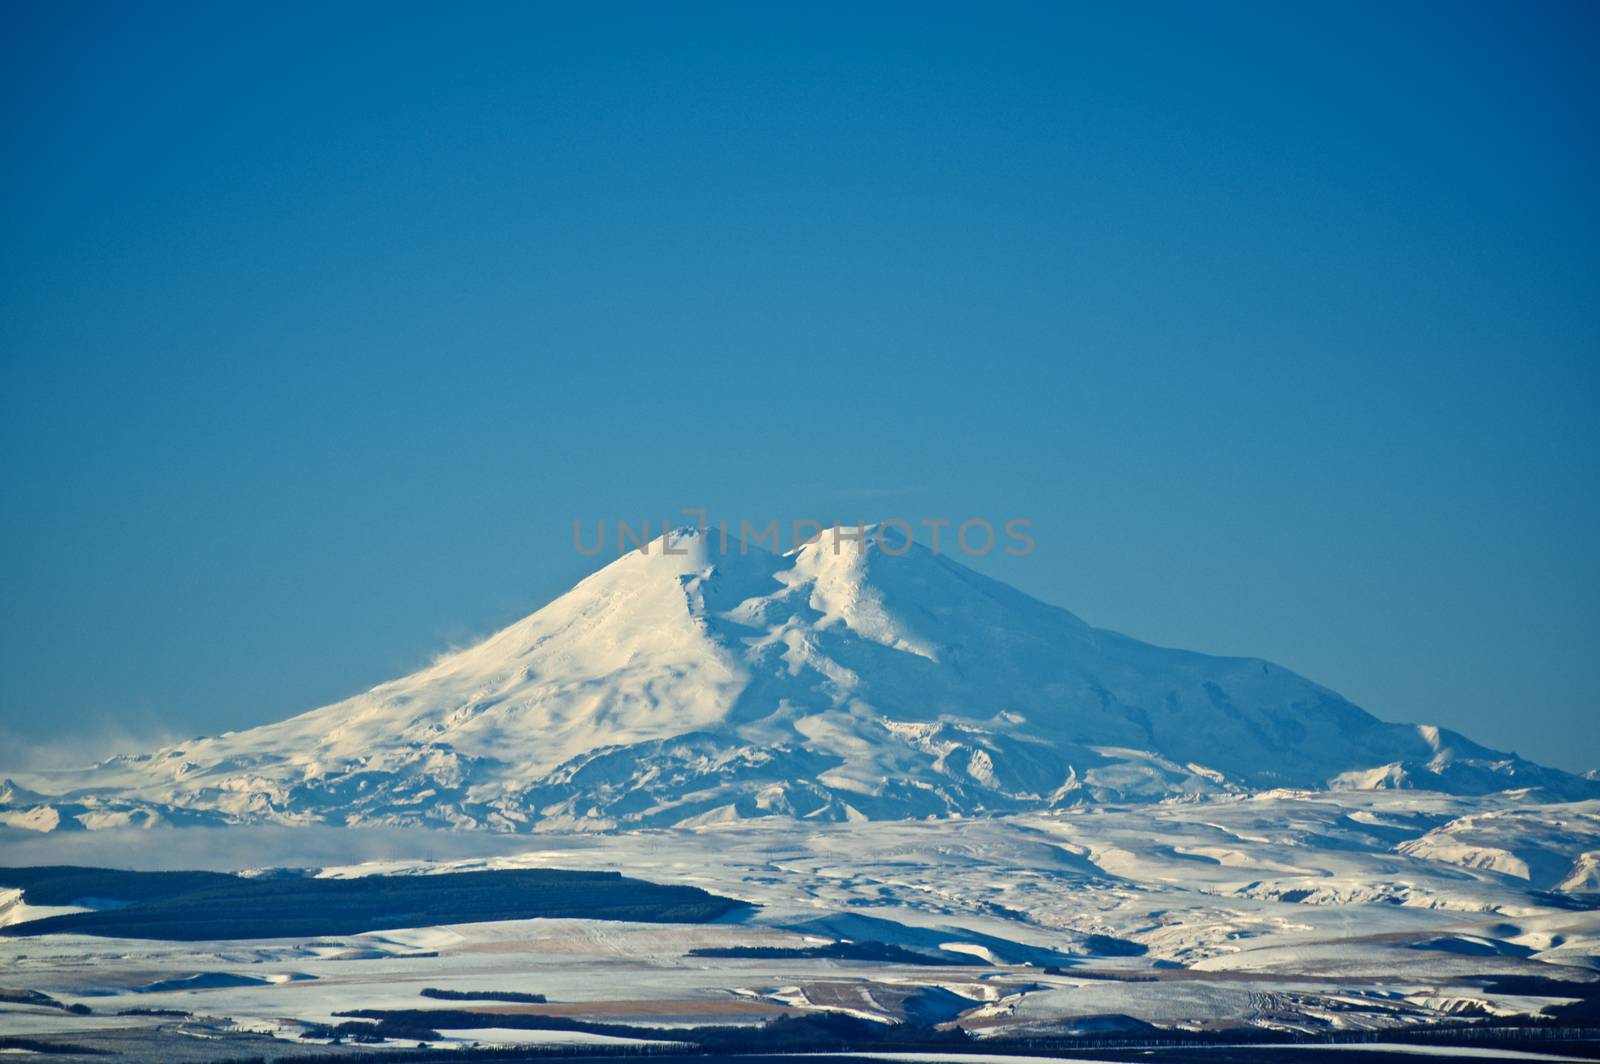 Mountain Peaks of Caucasus by zhekos